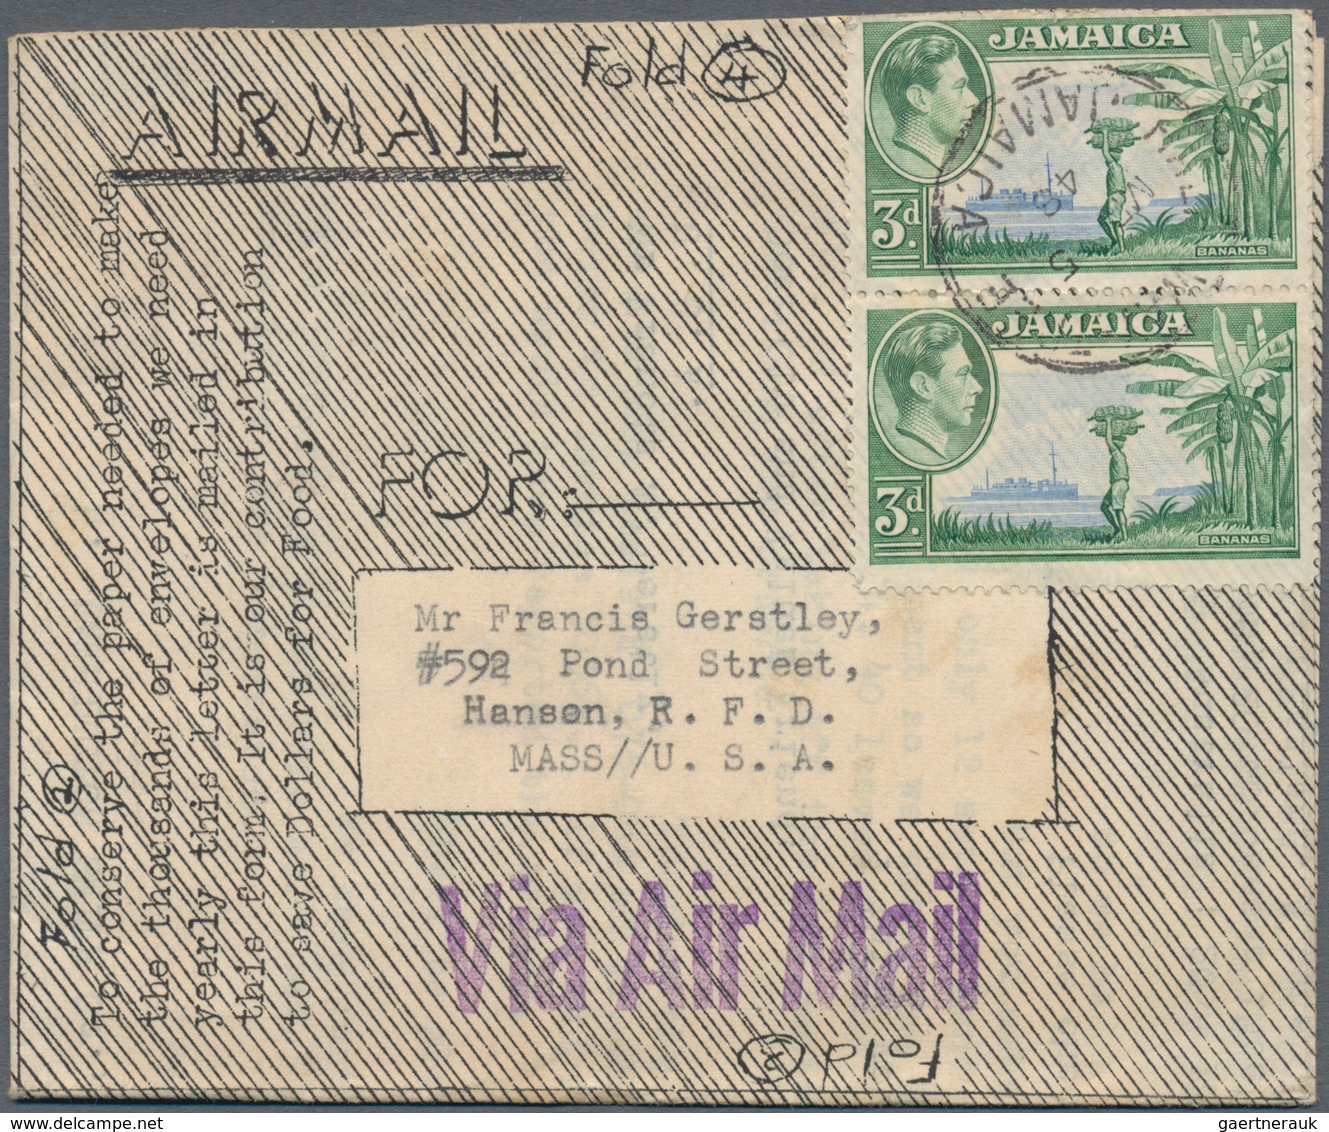 Jamaica: 1947/1995 (ca.) aerogrammes ca. 265 used/unused/CTO airletters incl. Specimen and postal fo